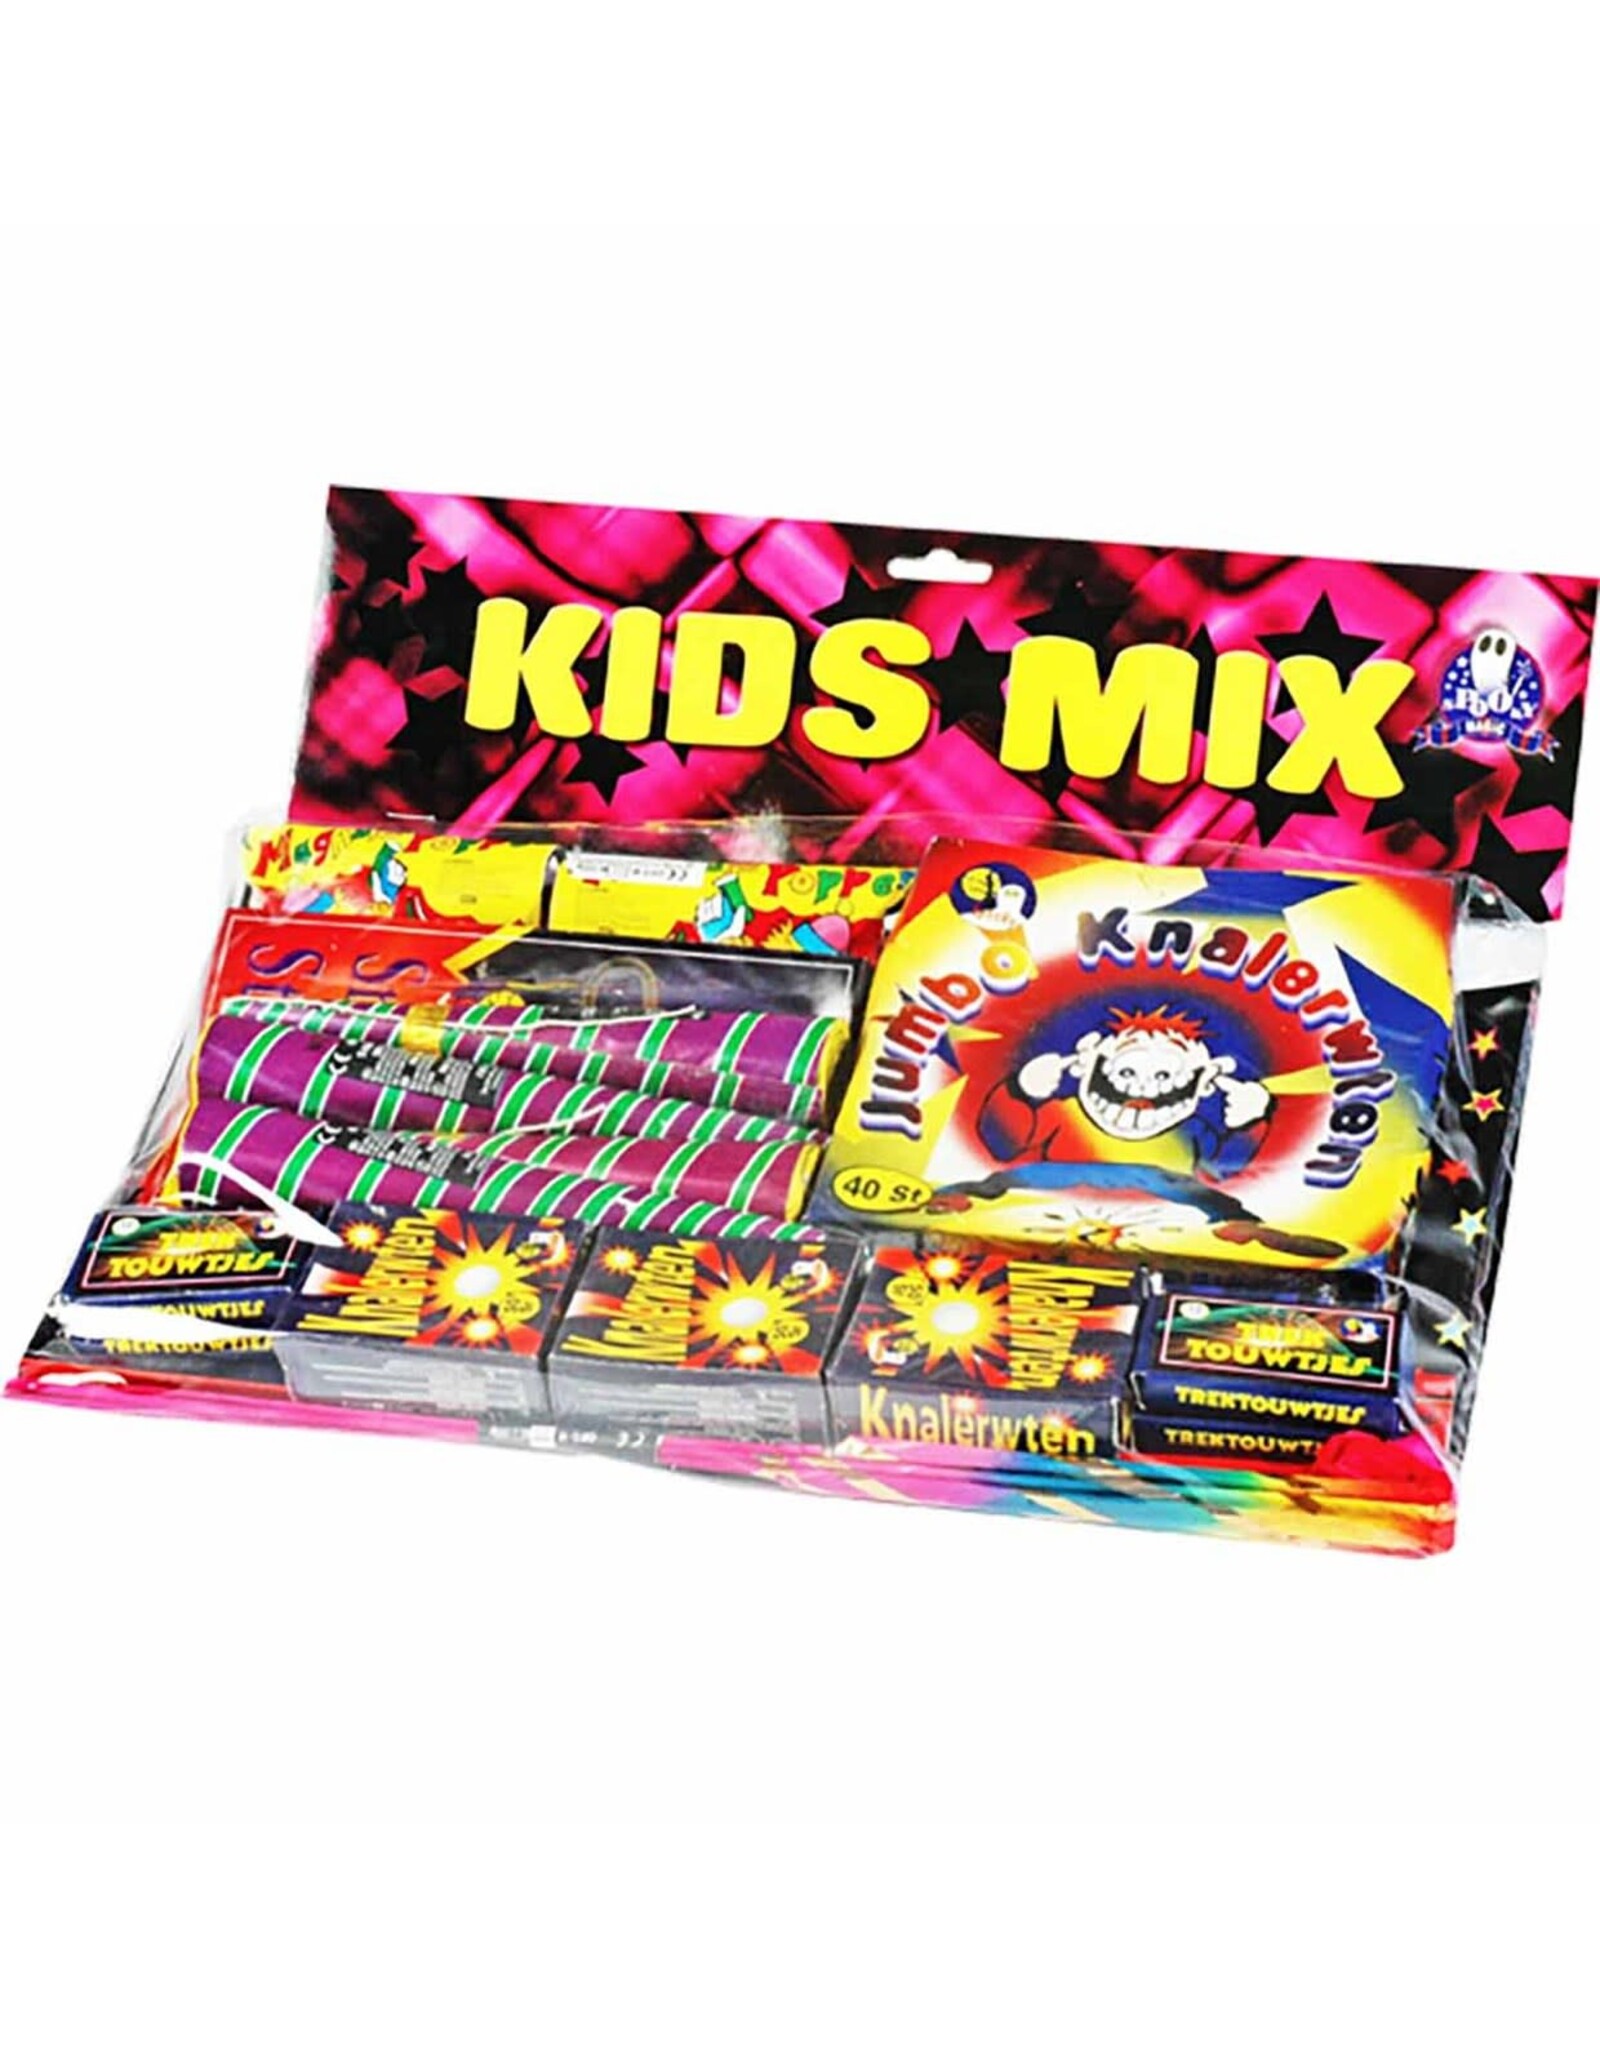 Kids mix